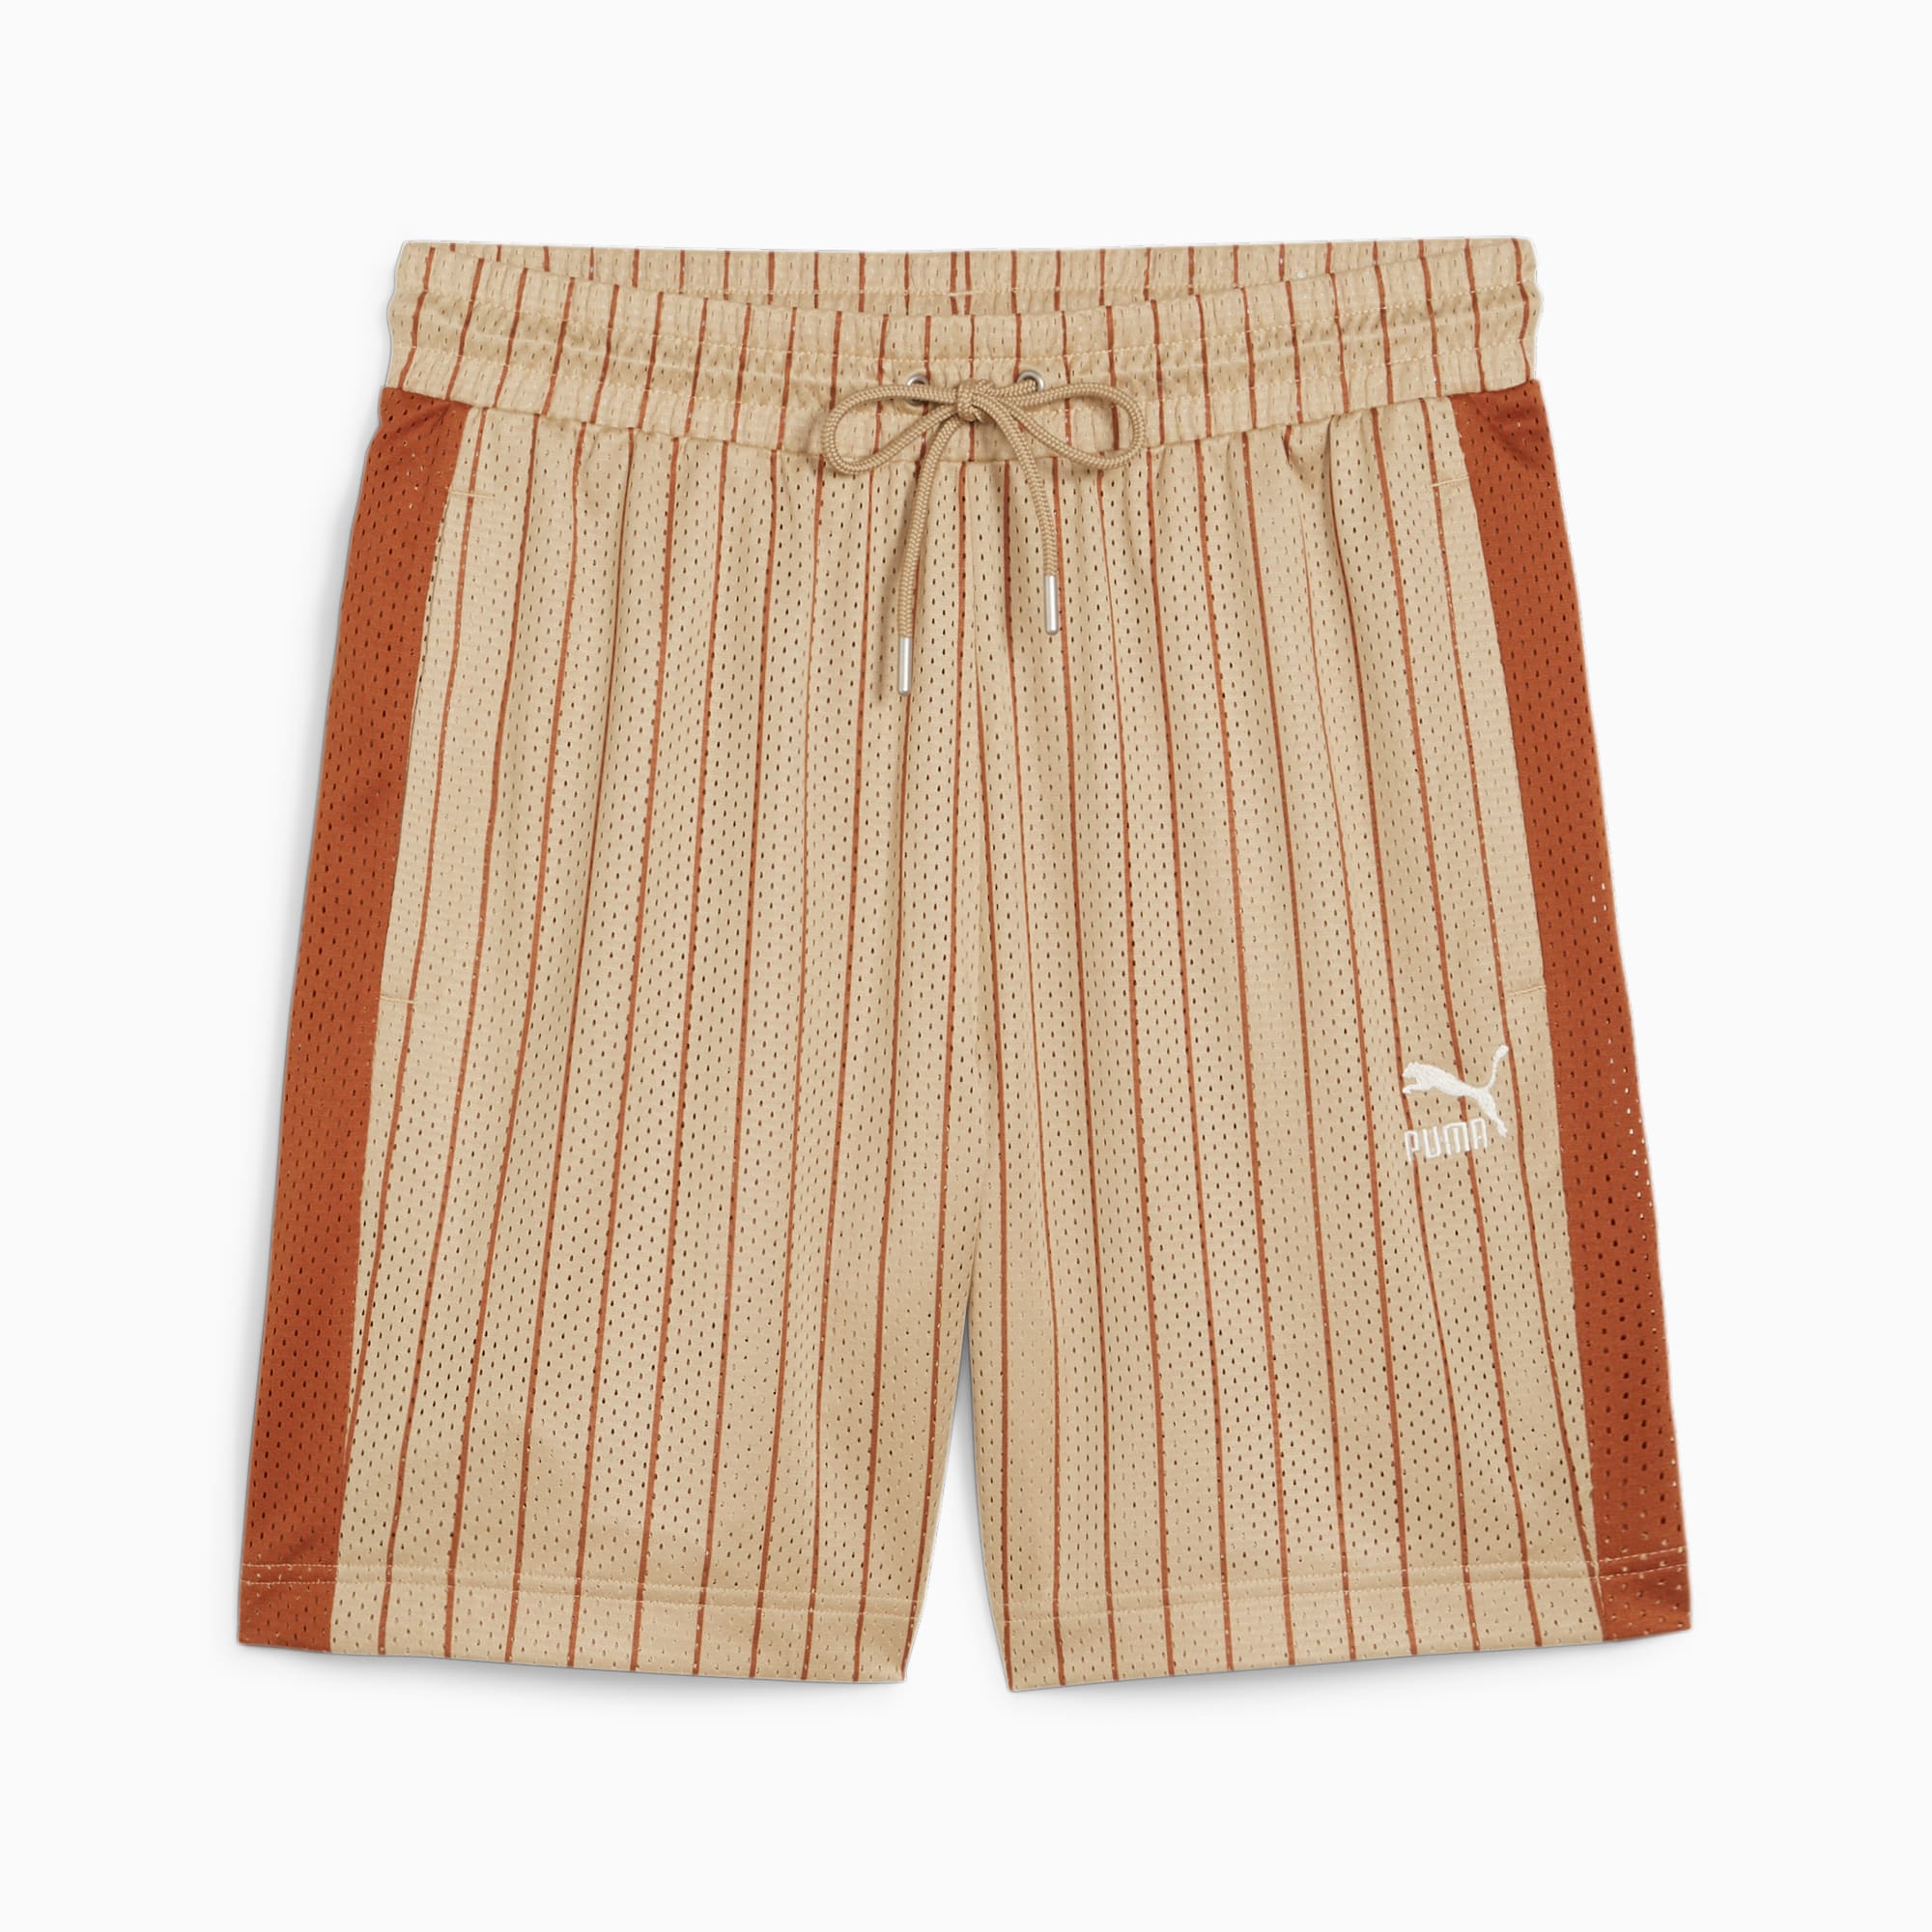 PUMA T7 Men's Mesh Shorts, Prairie Tan/AOP, Size XS, Clothing